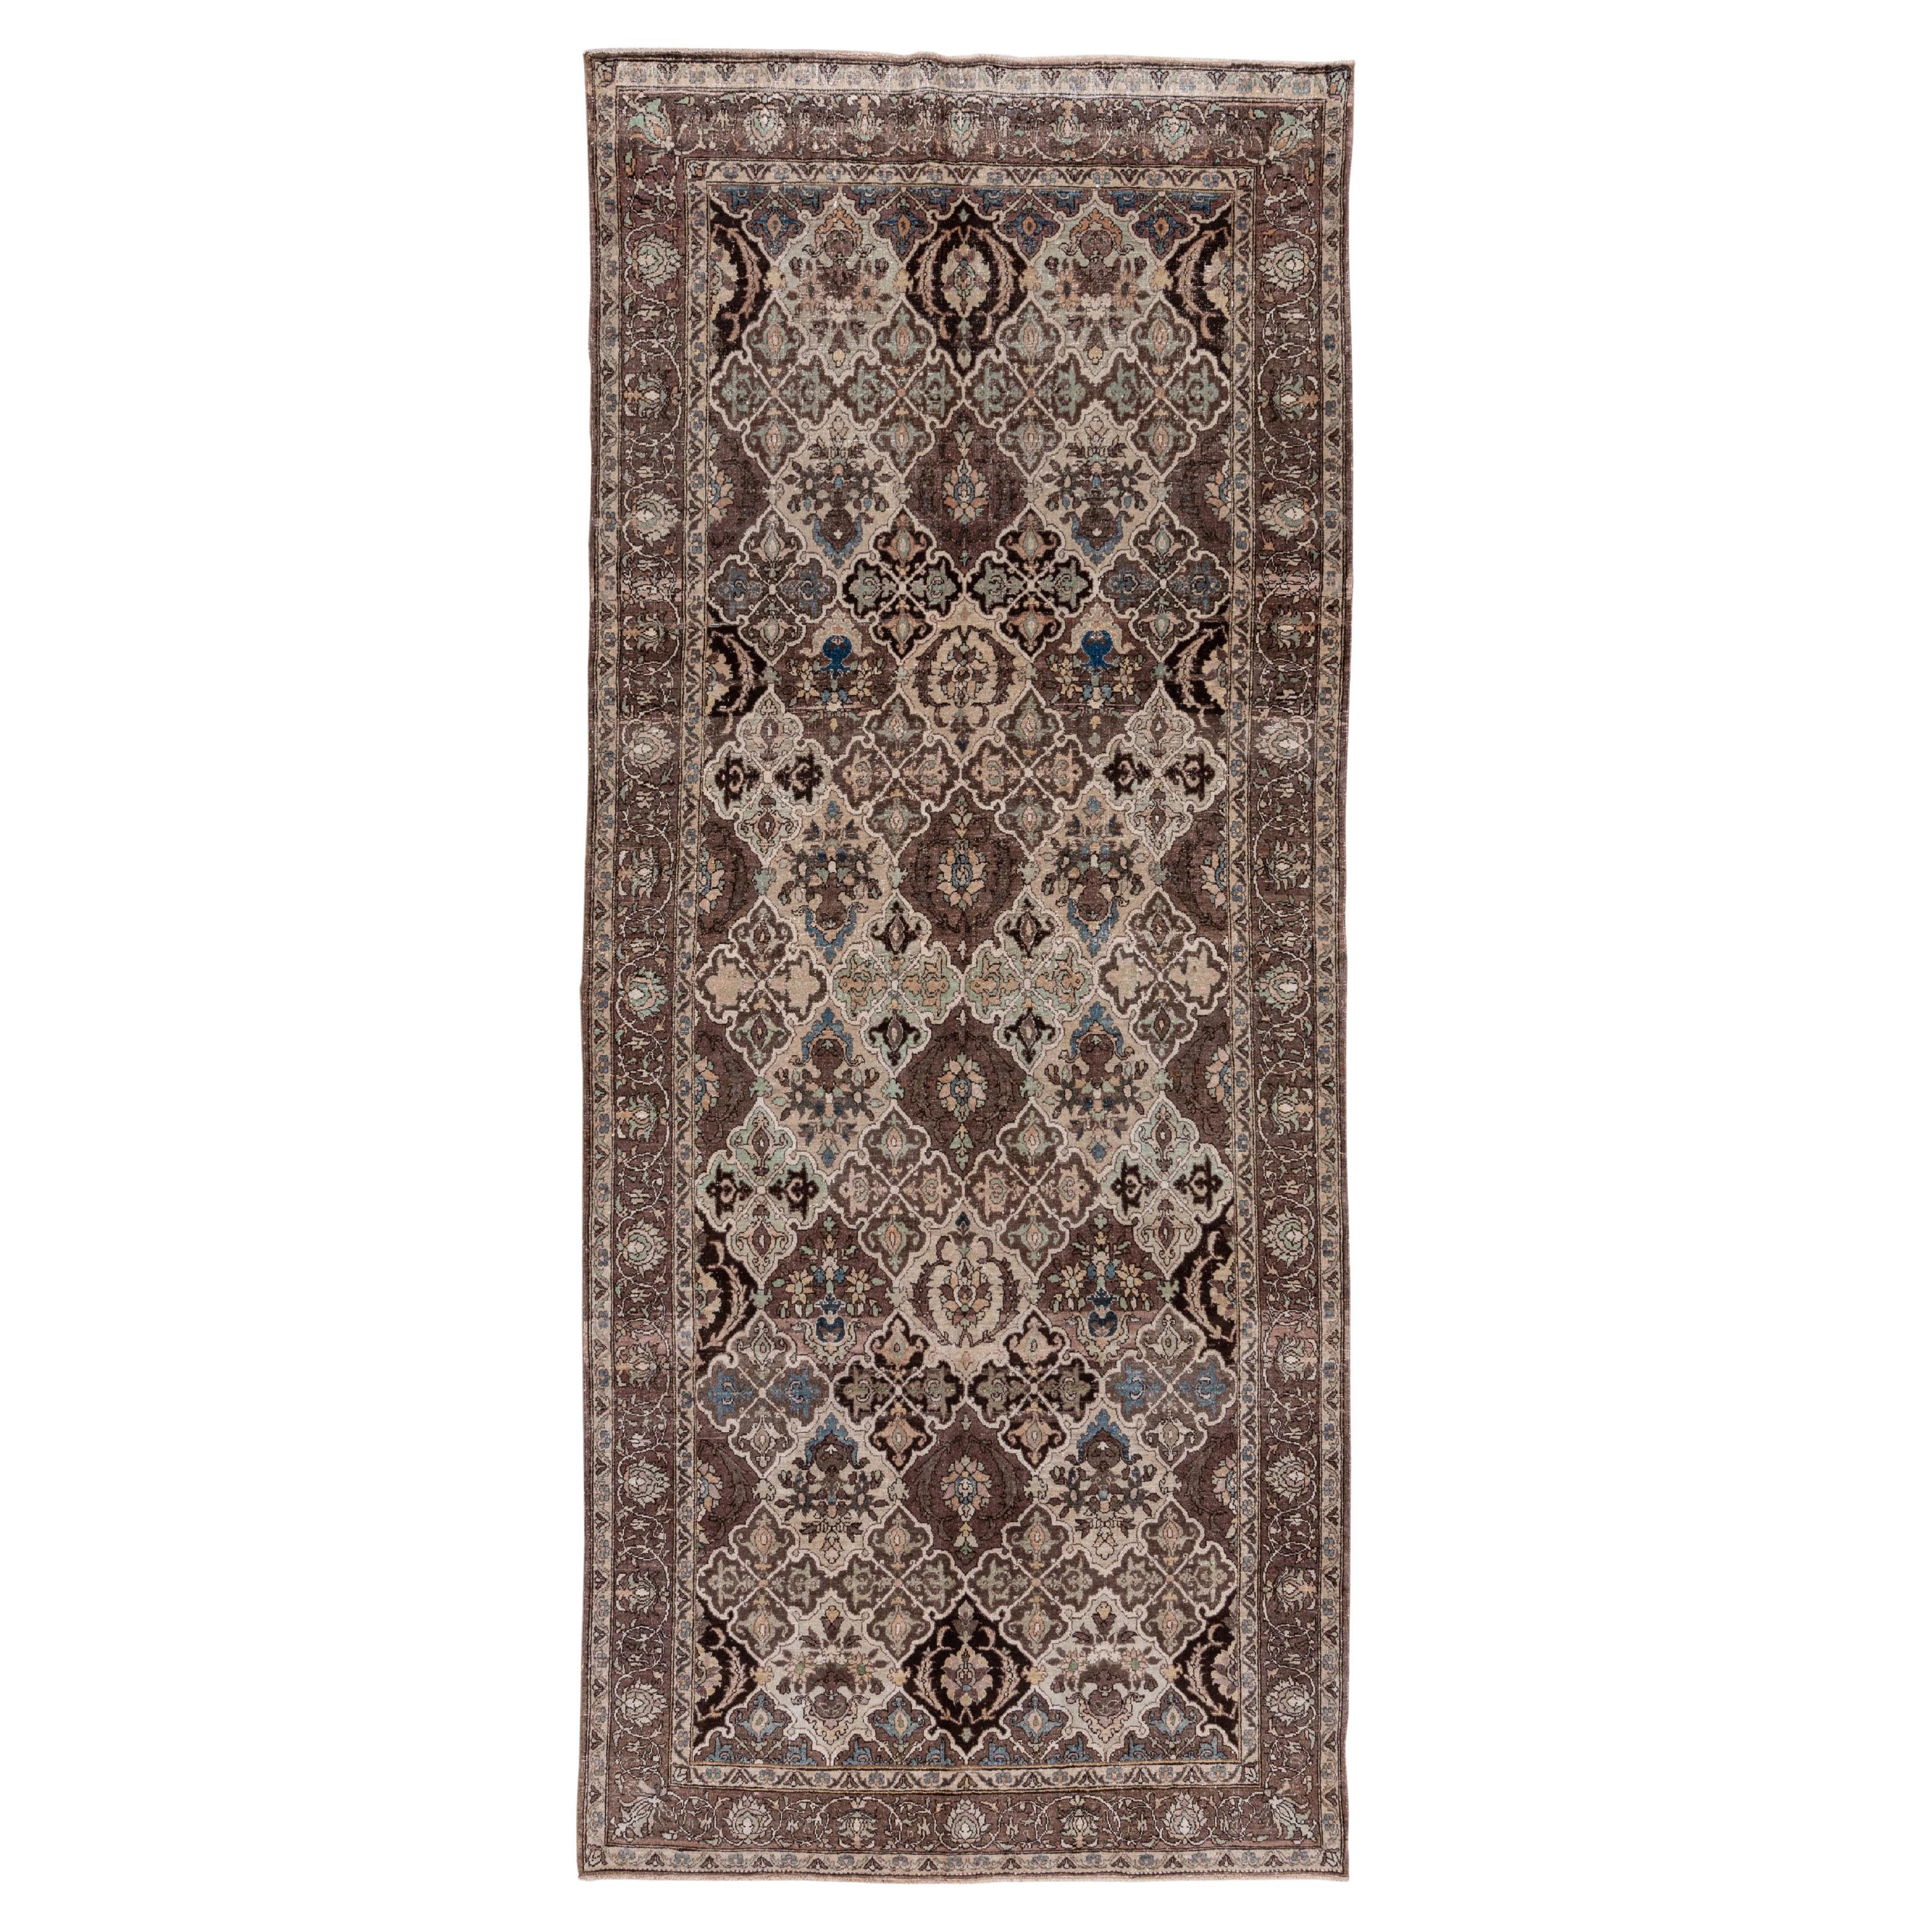 Fine Antique Persian Tabriz Kellegi Rug, Brown Palette, Seafoam & Blue Accents